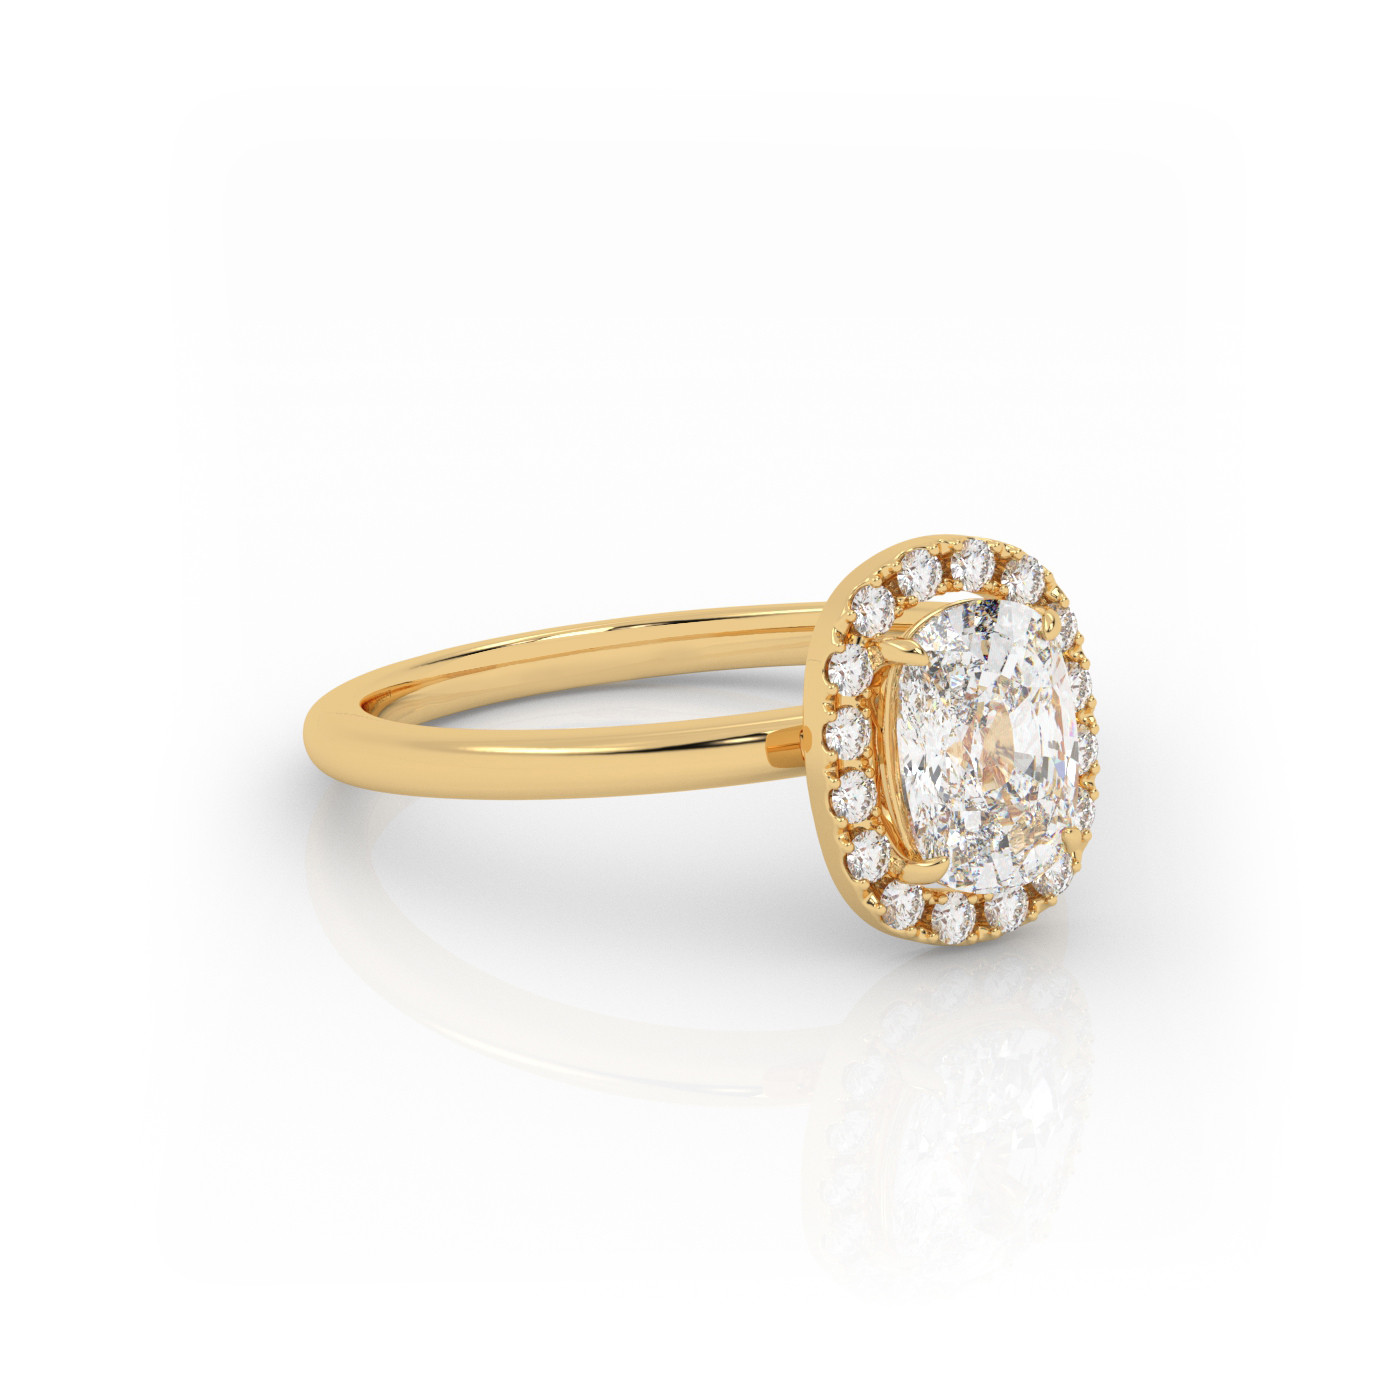 18K YELLOW GOLD Elongated Cushion Cut Diamond Ring With Halo Style